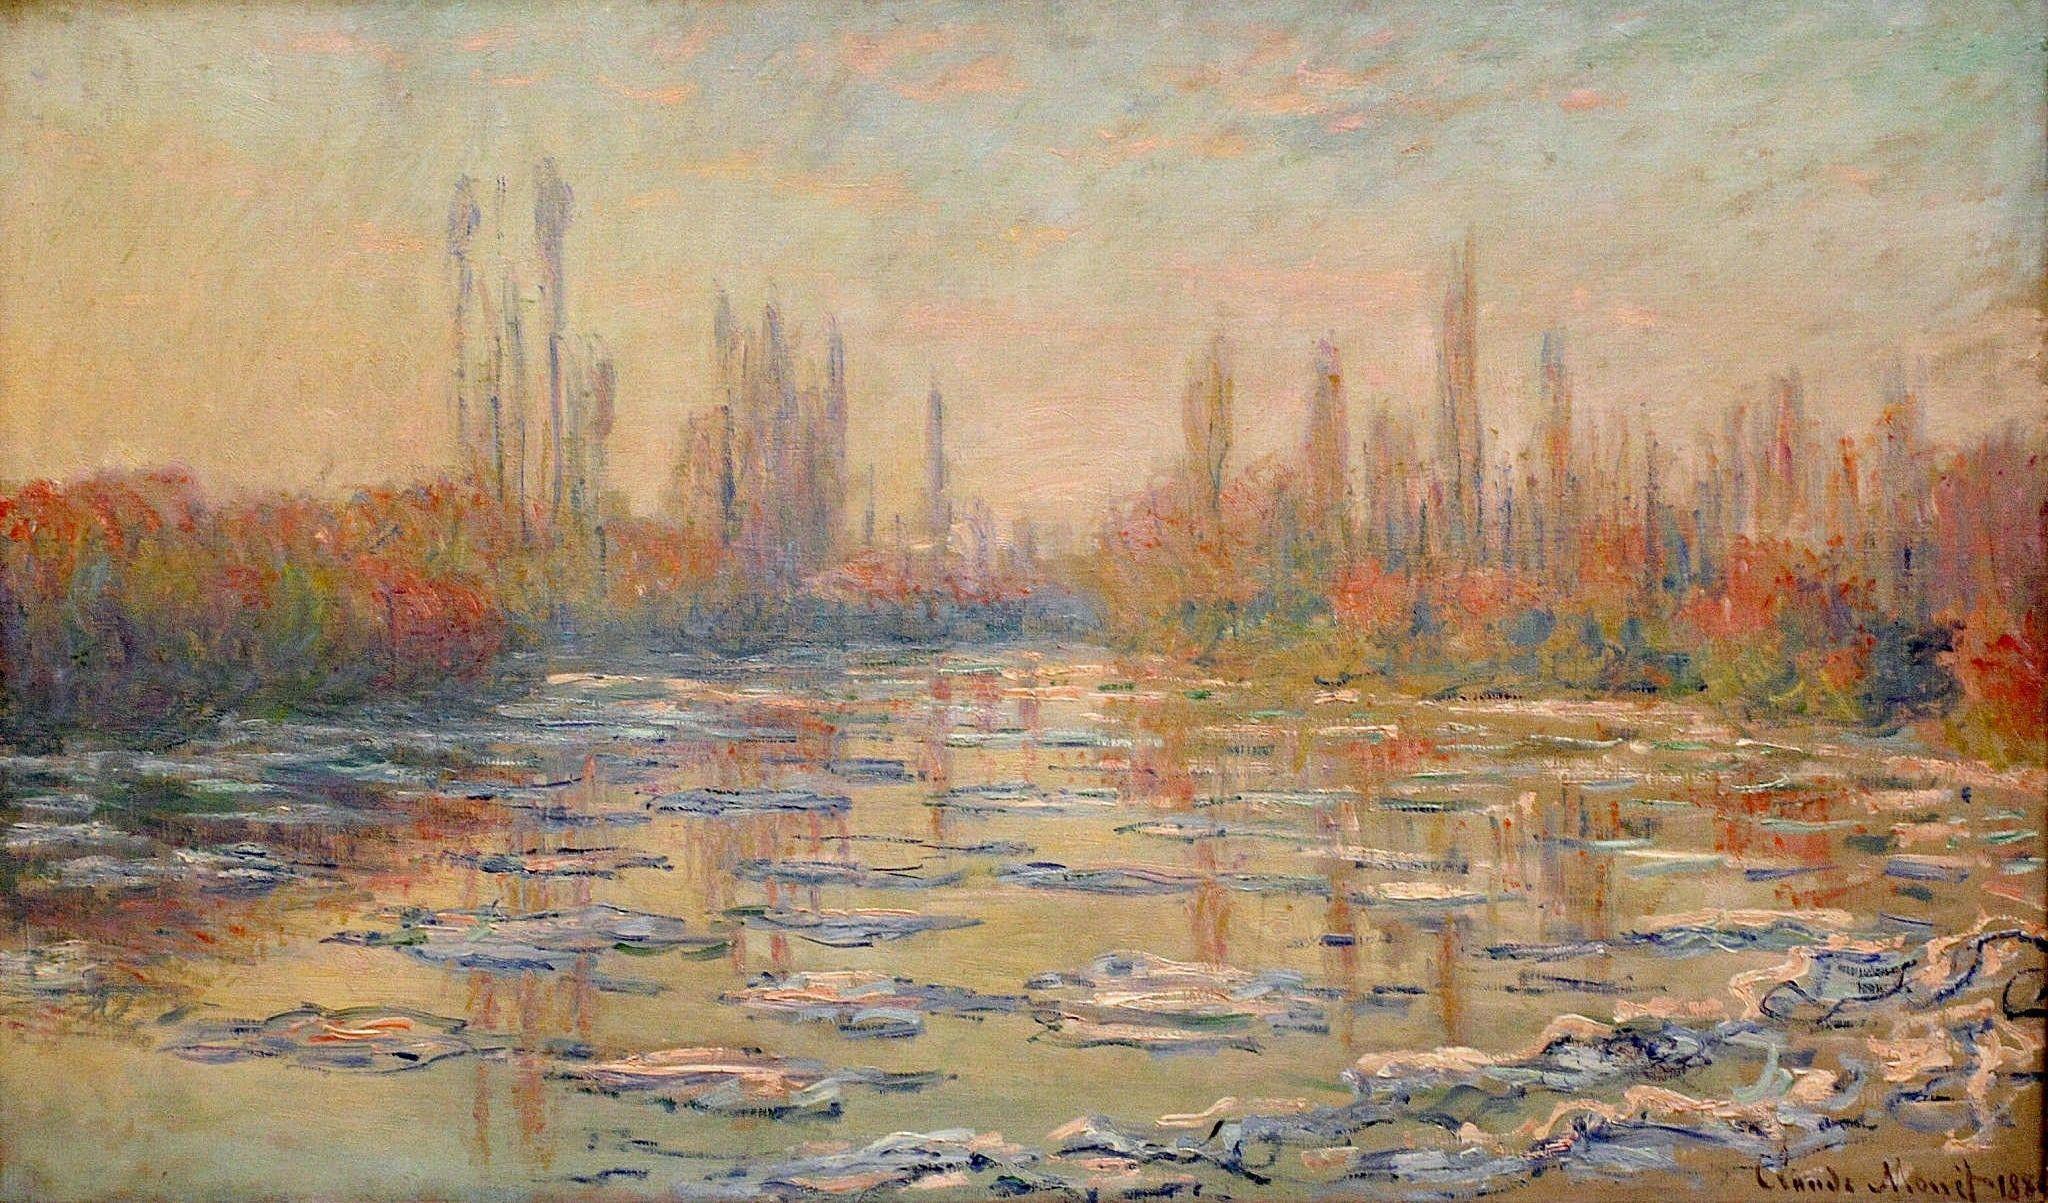 Claude Monet Wallpaper